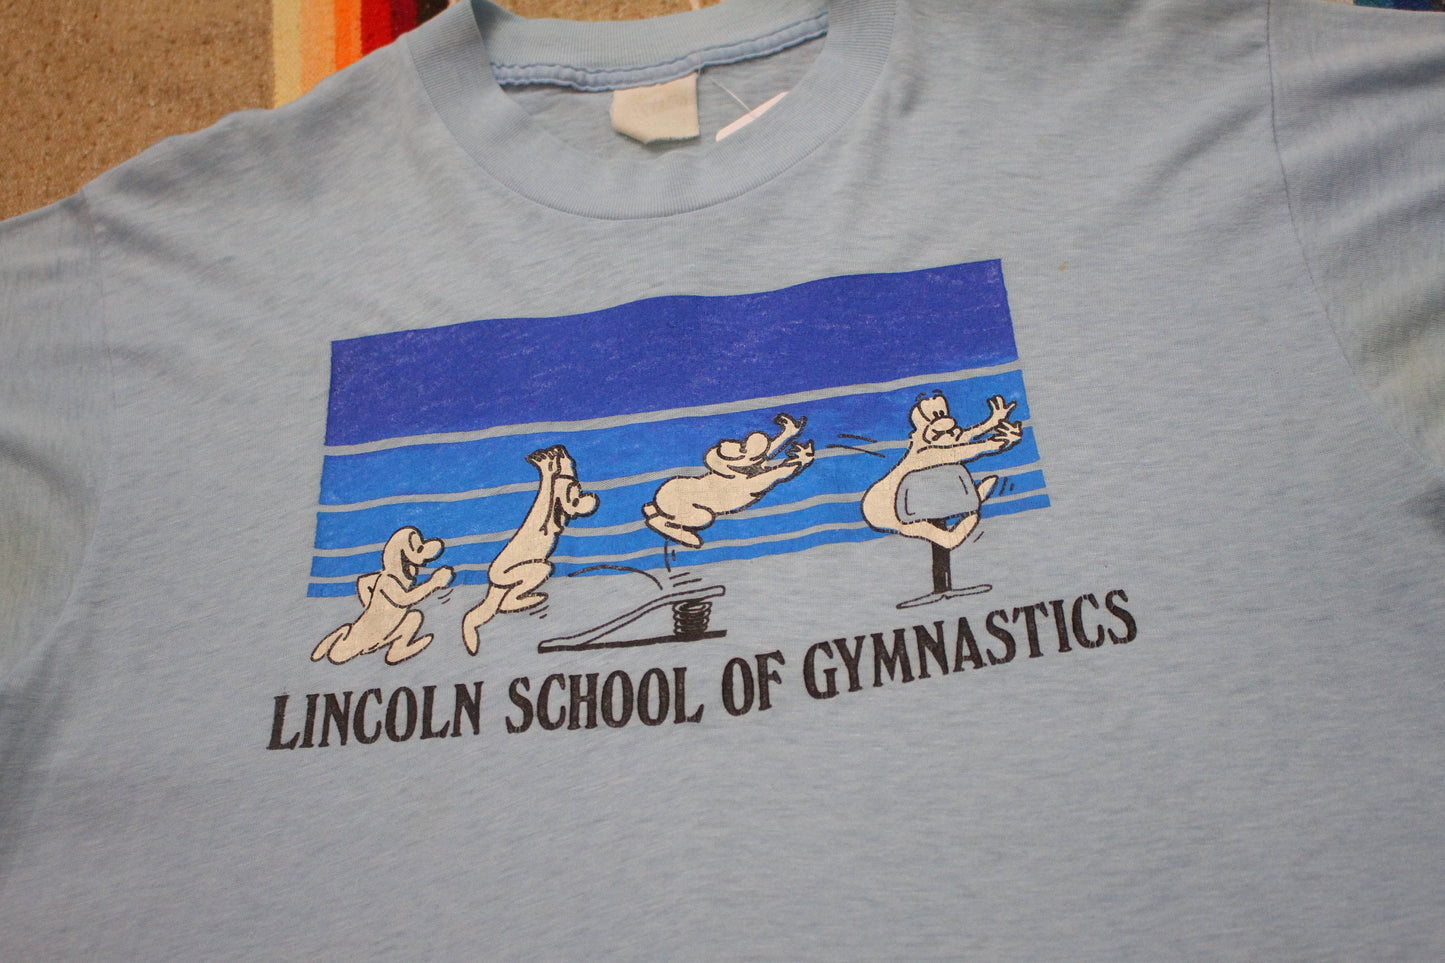 1980s Lincoln School of Gymnastics Cartoon T-Shirt Size S/M